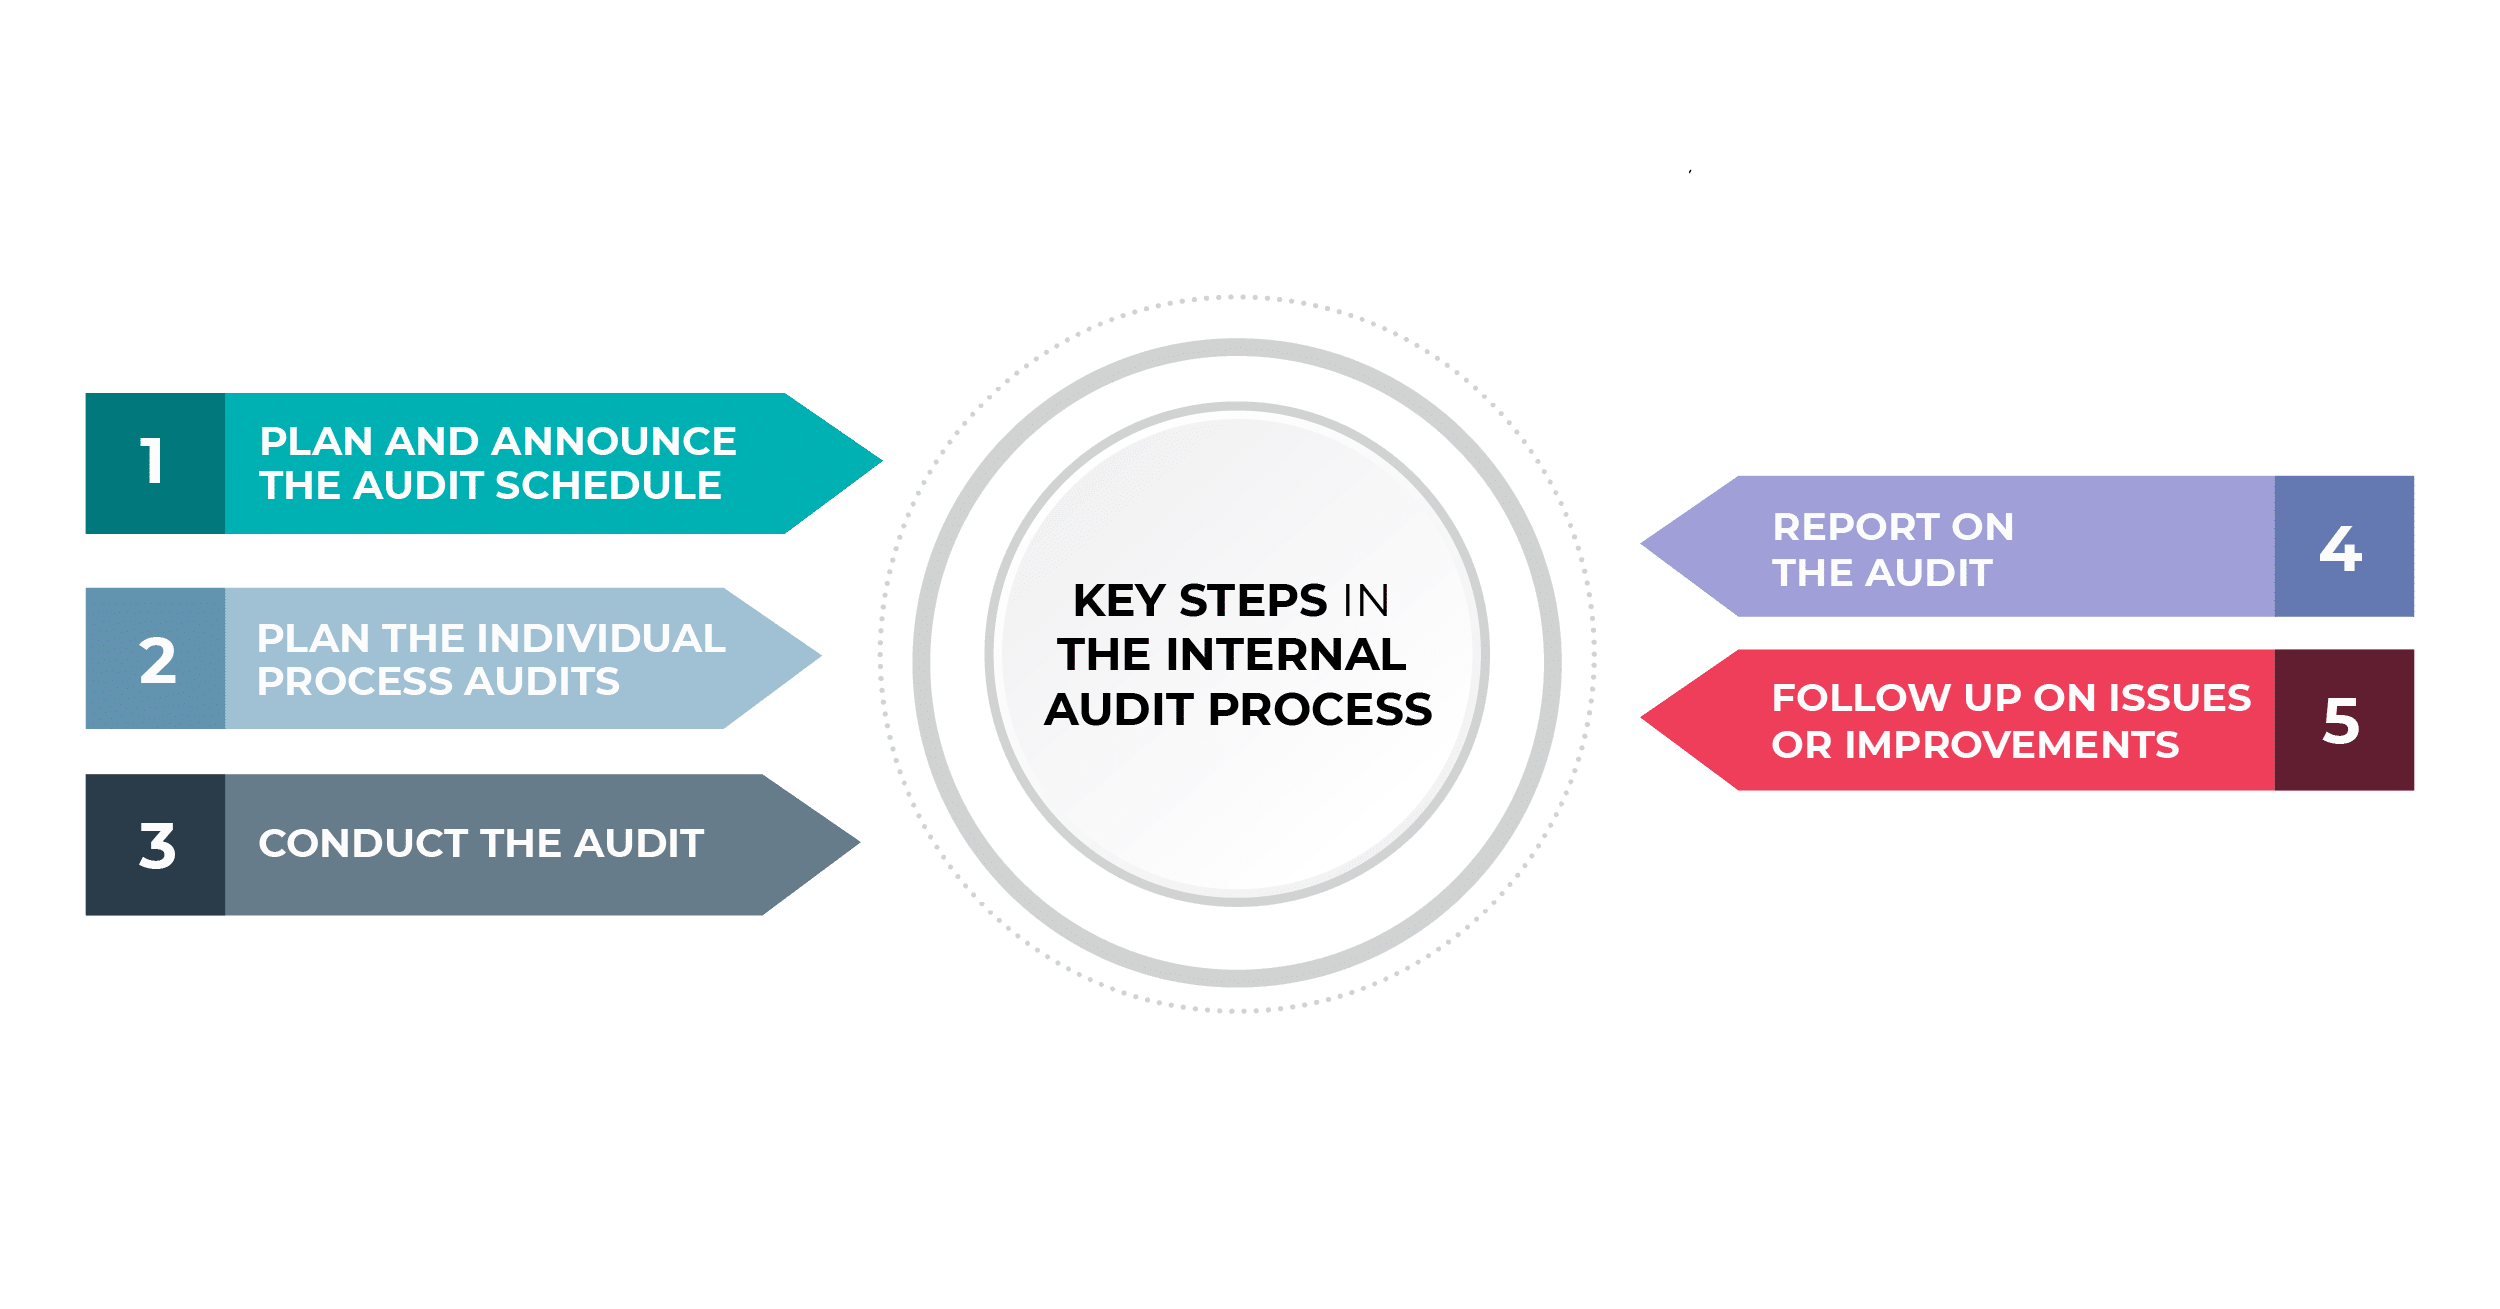 Key steps in the internal audit process